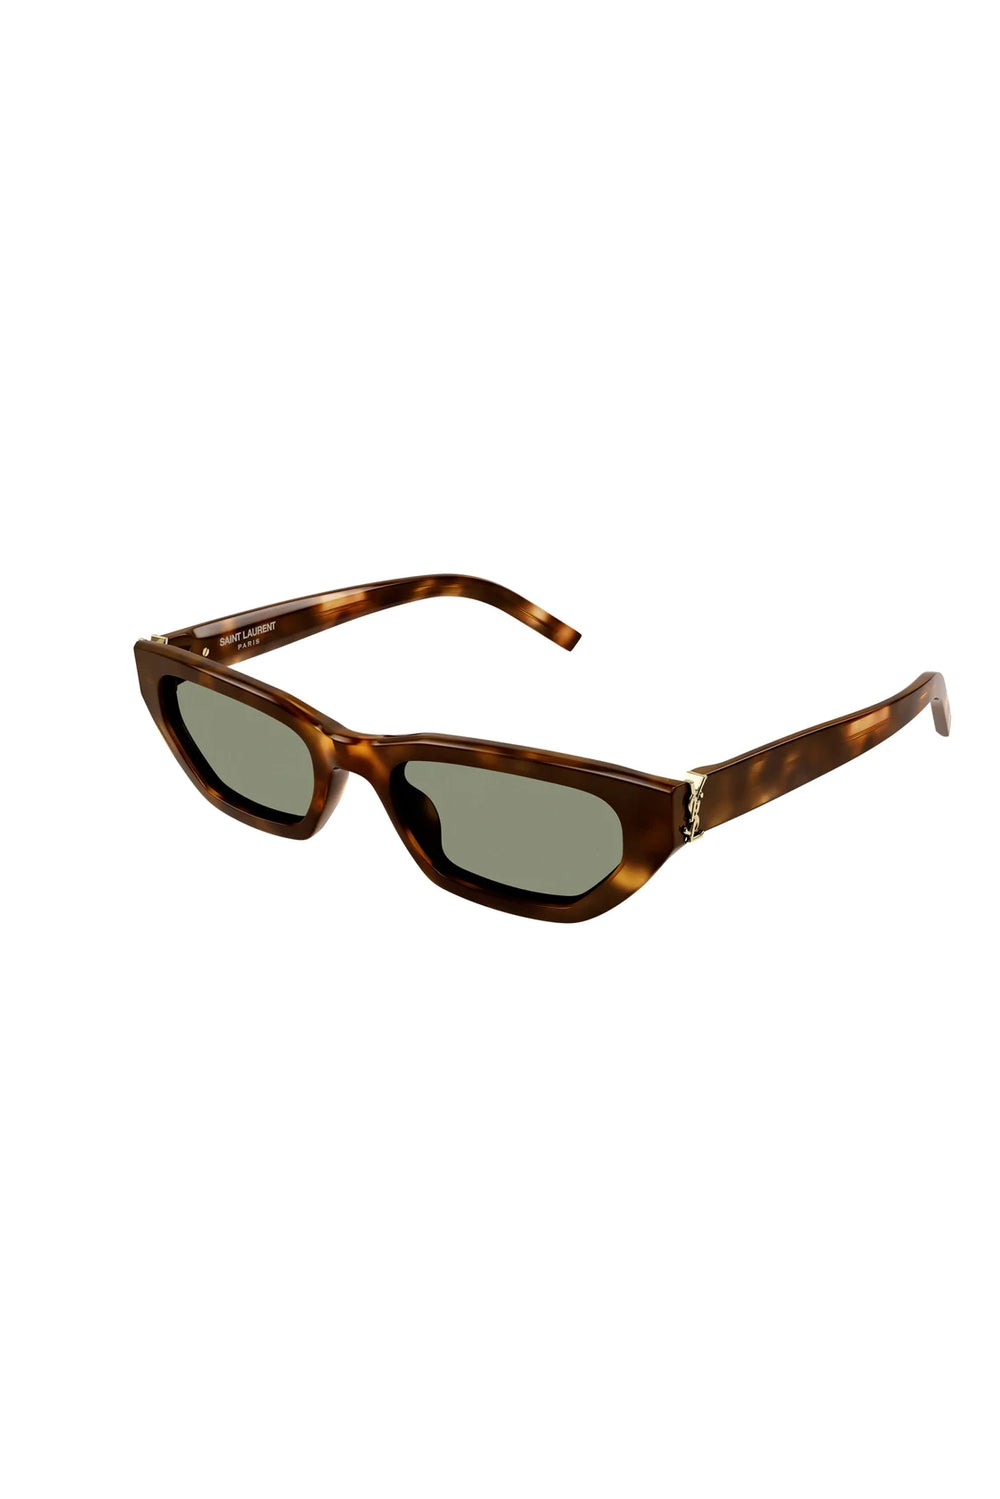 Saint Laurent Cat-Eye Sunglasses Havana SLM126 003